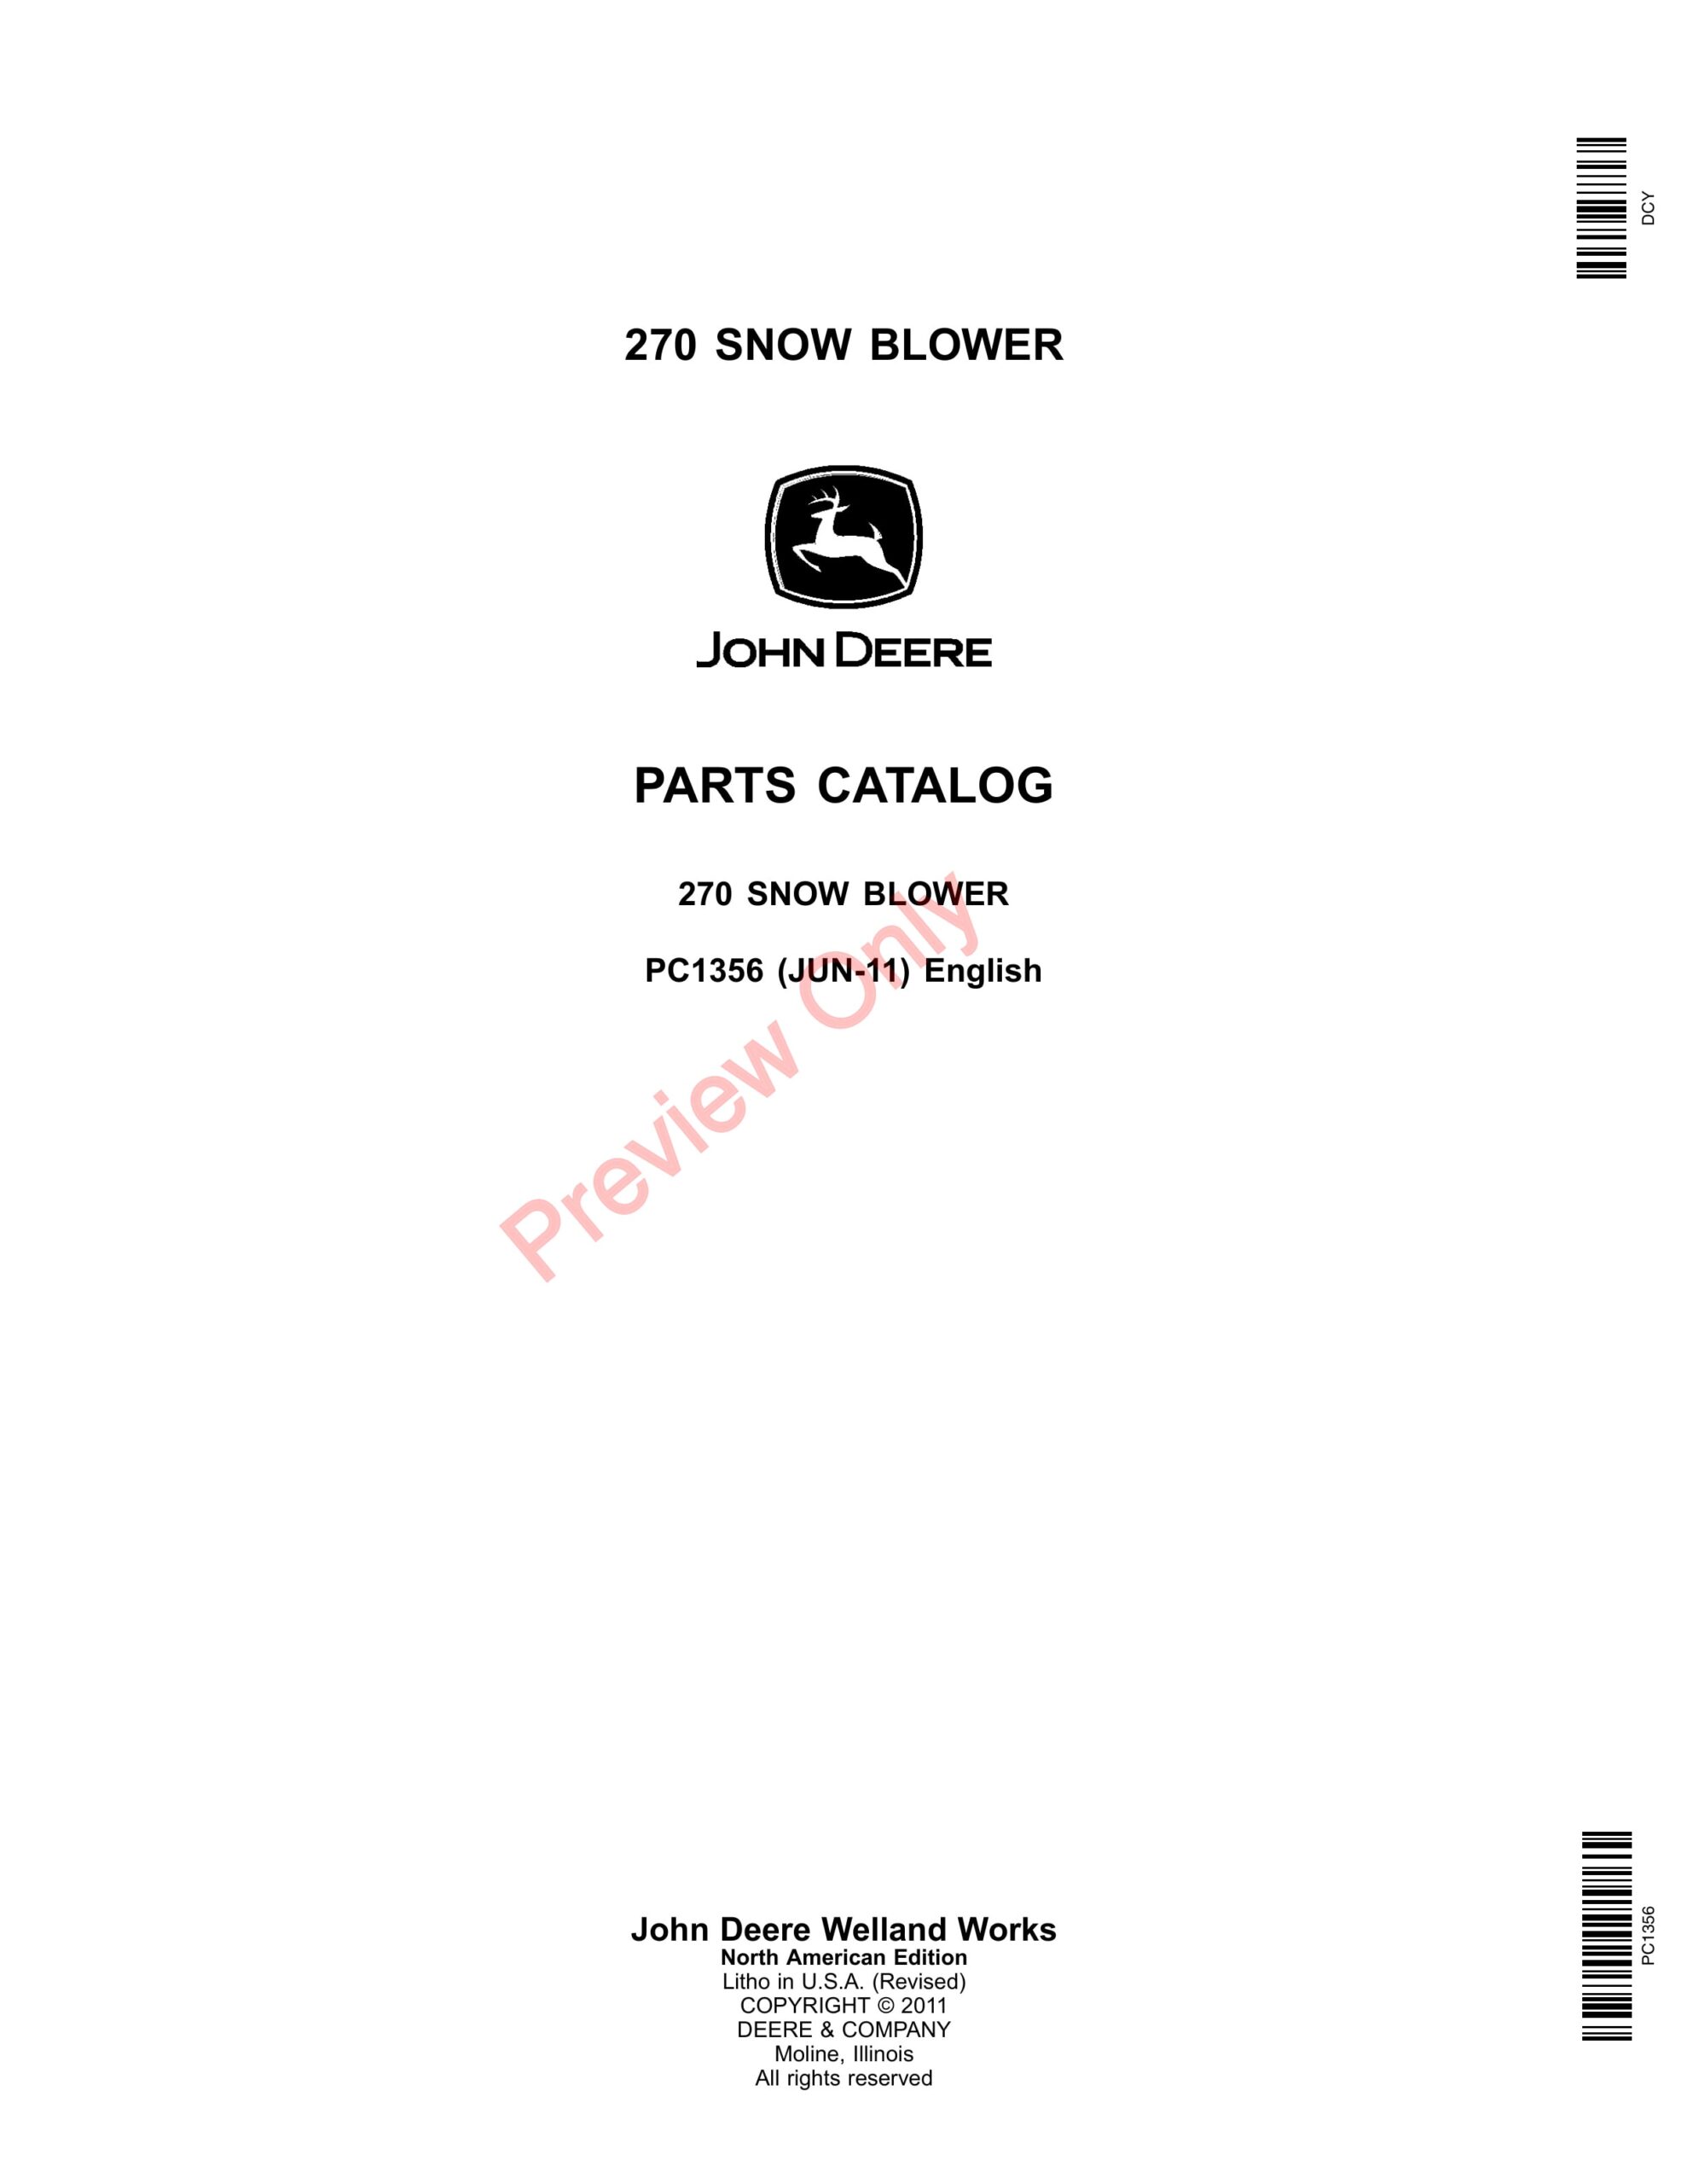 John Deere 270 Rotary Snow Blower Parts Catalog PC1356 01JUN11-1